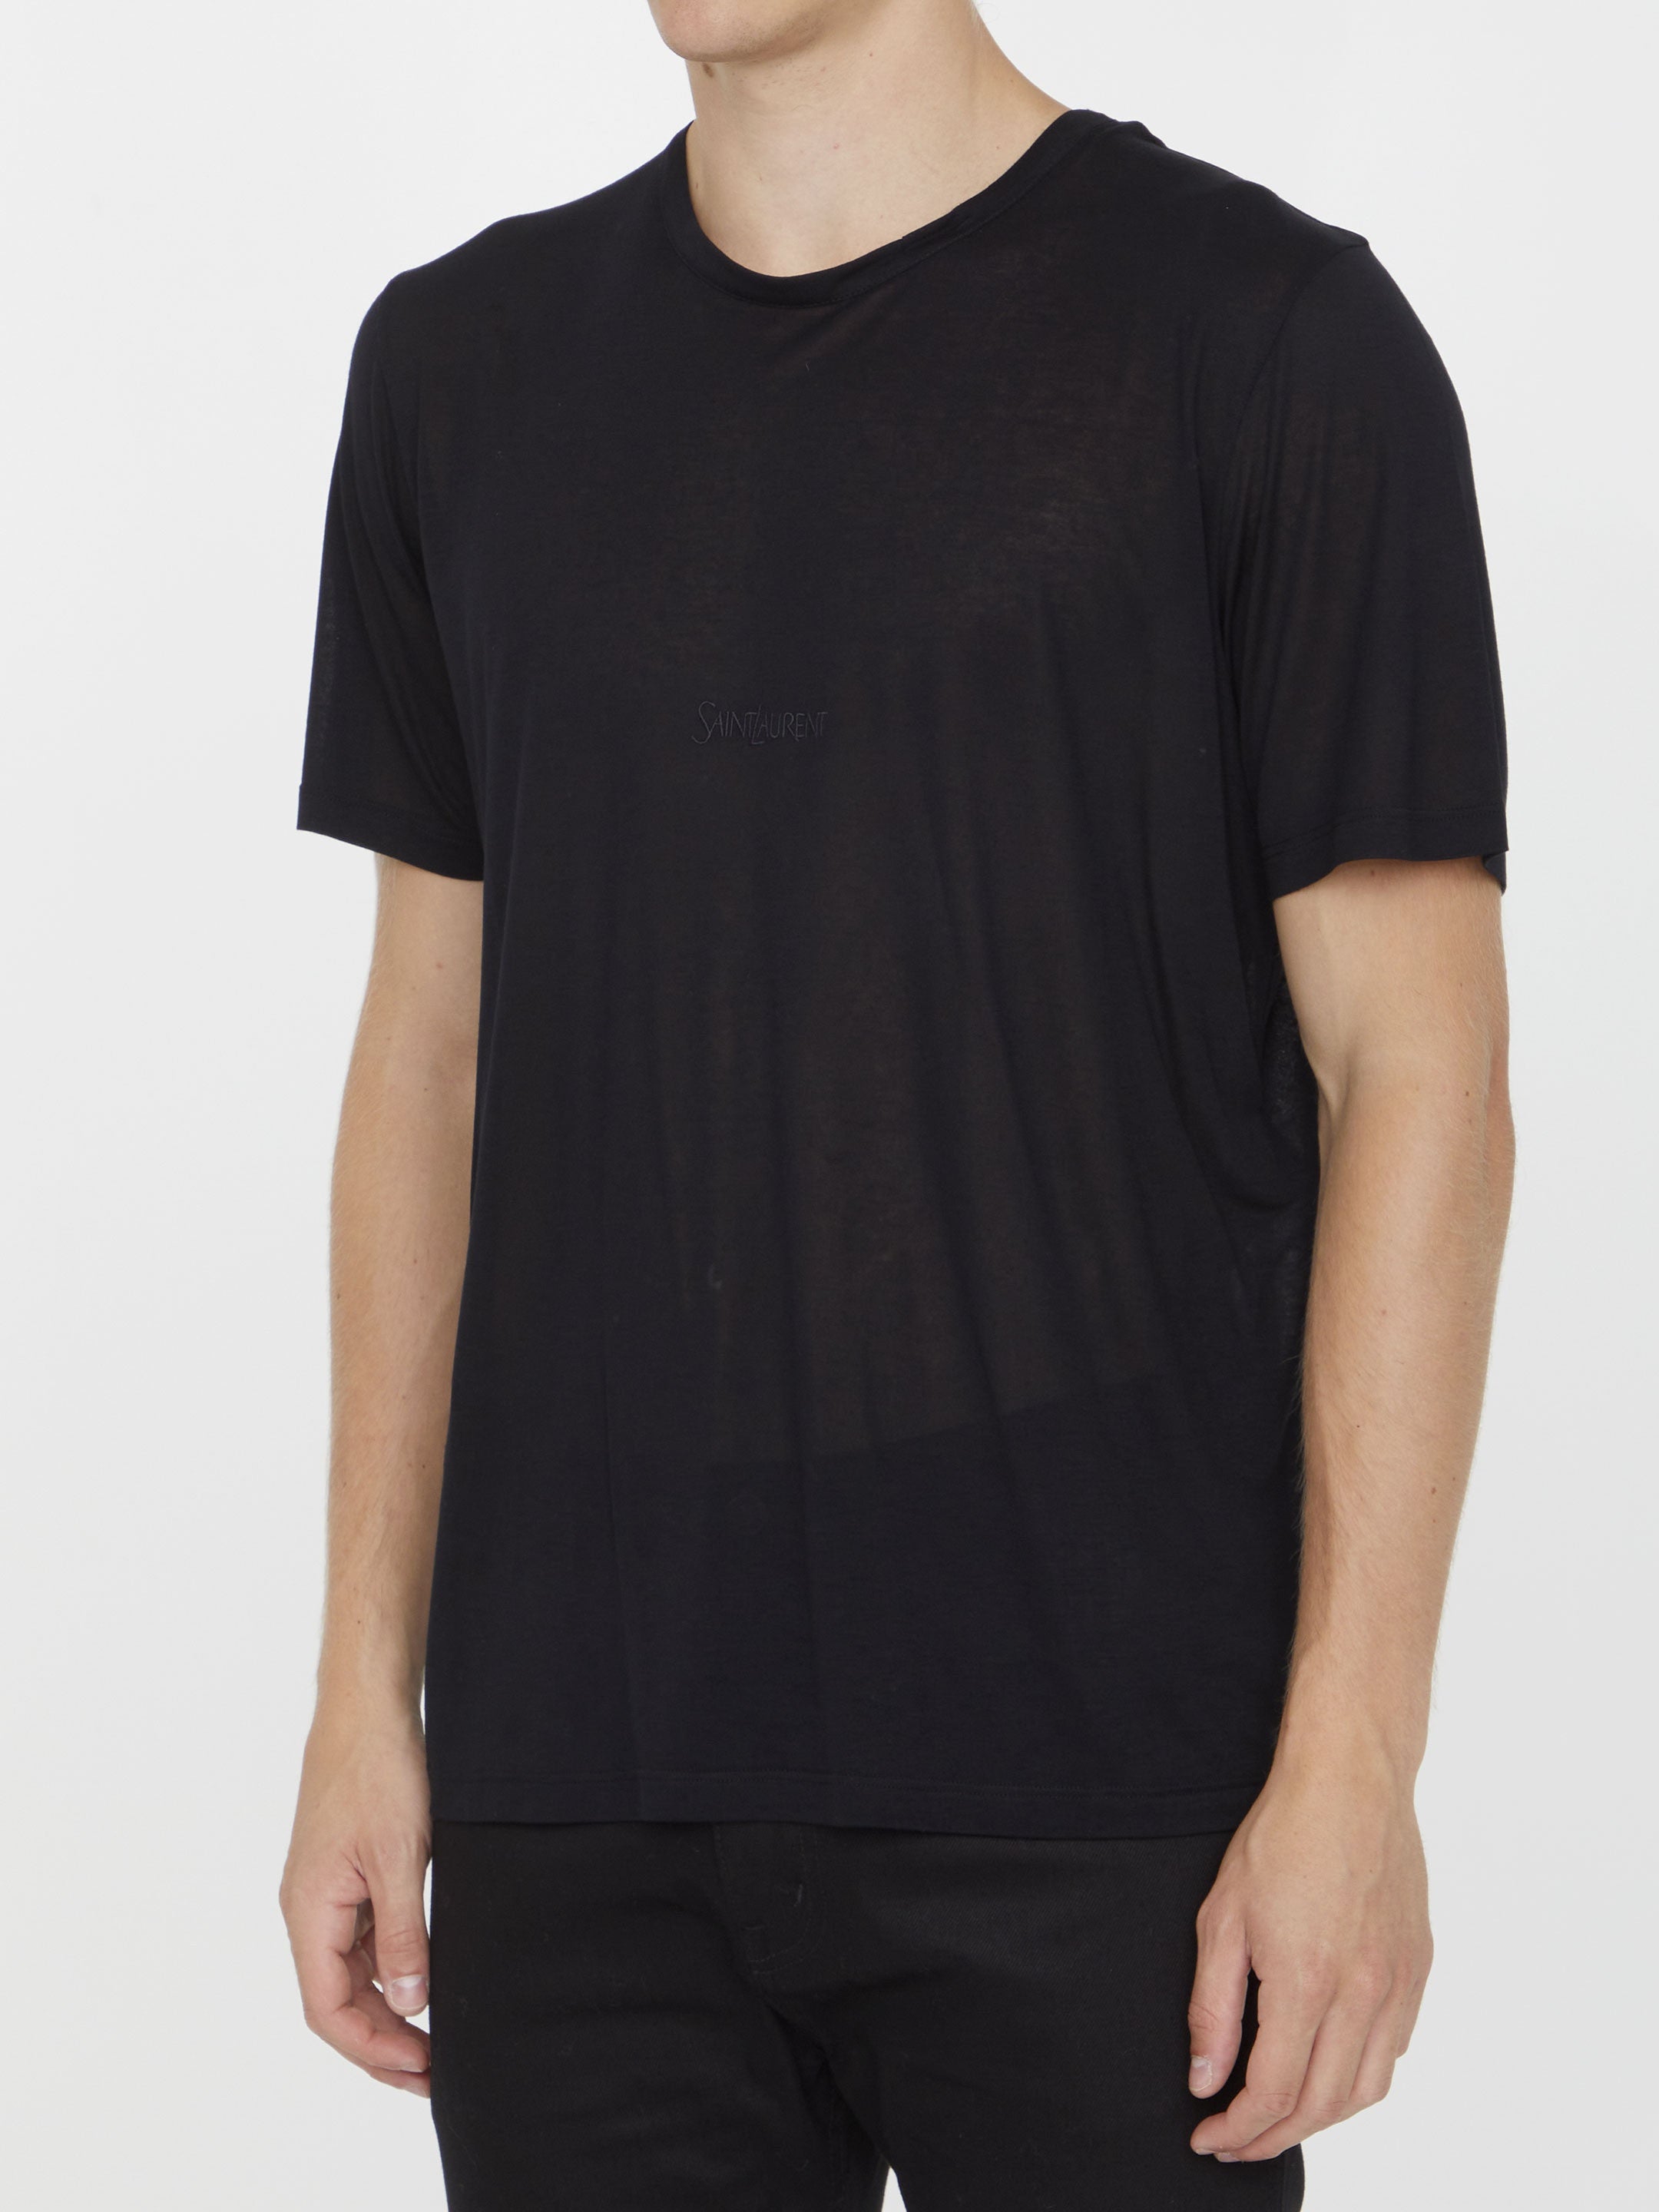 SAINT-LAURENT-OUTLET-SALE-Black-t-shirt-with-logo-Shirts-ARCHIVE-COLLECTION-2.jpg